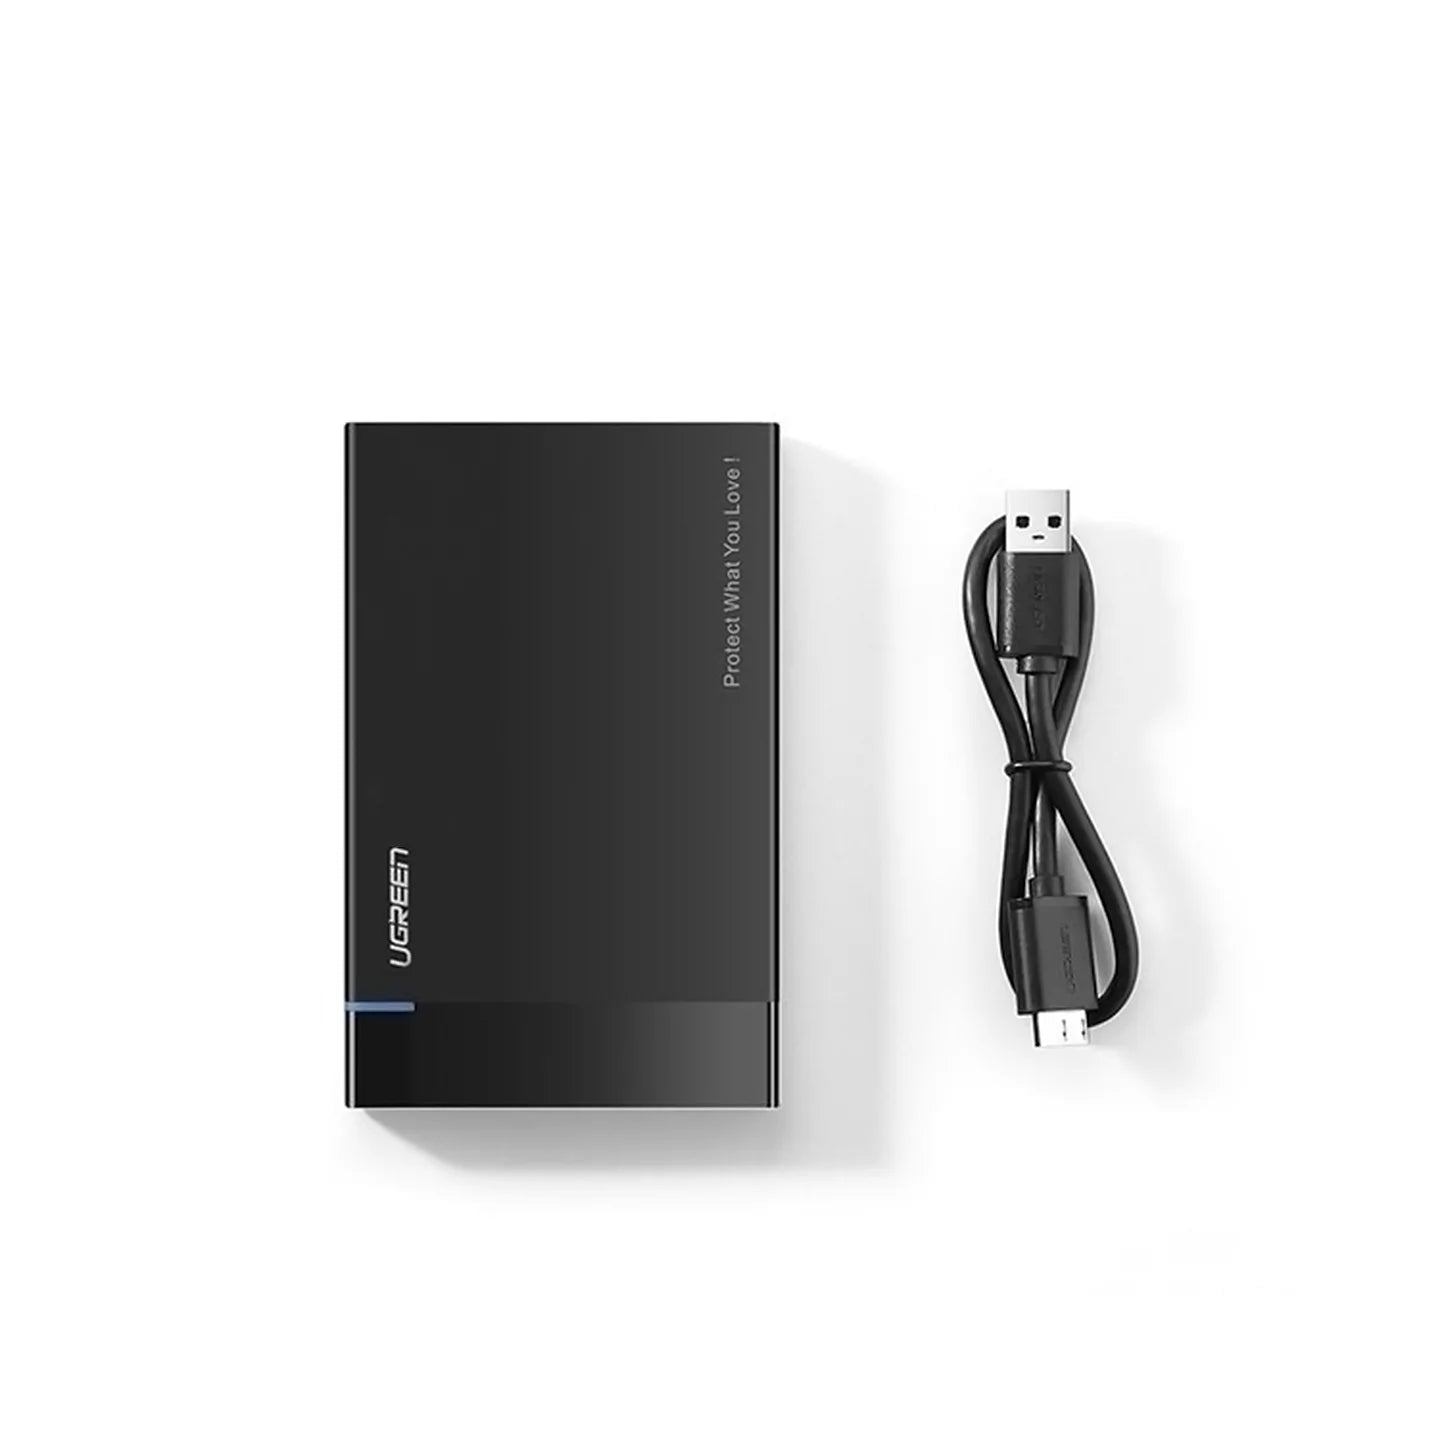 Boitier externe Ugreen USB 3.0 SATA 2.5 et 3.5 HDD/SSD (50422) prix Maroc